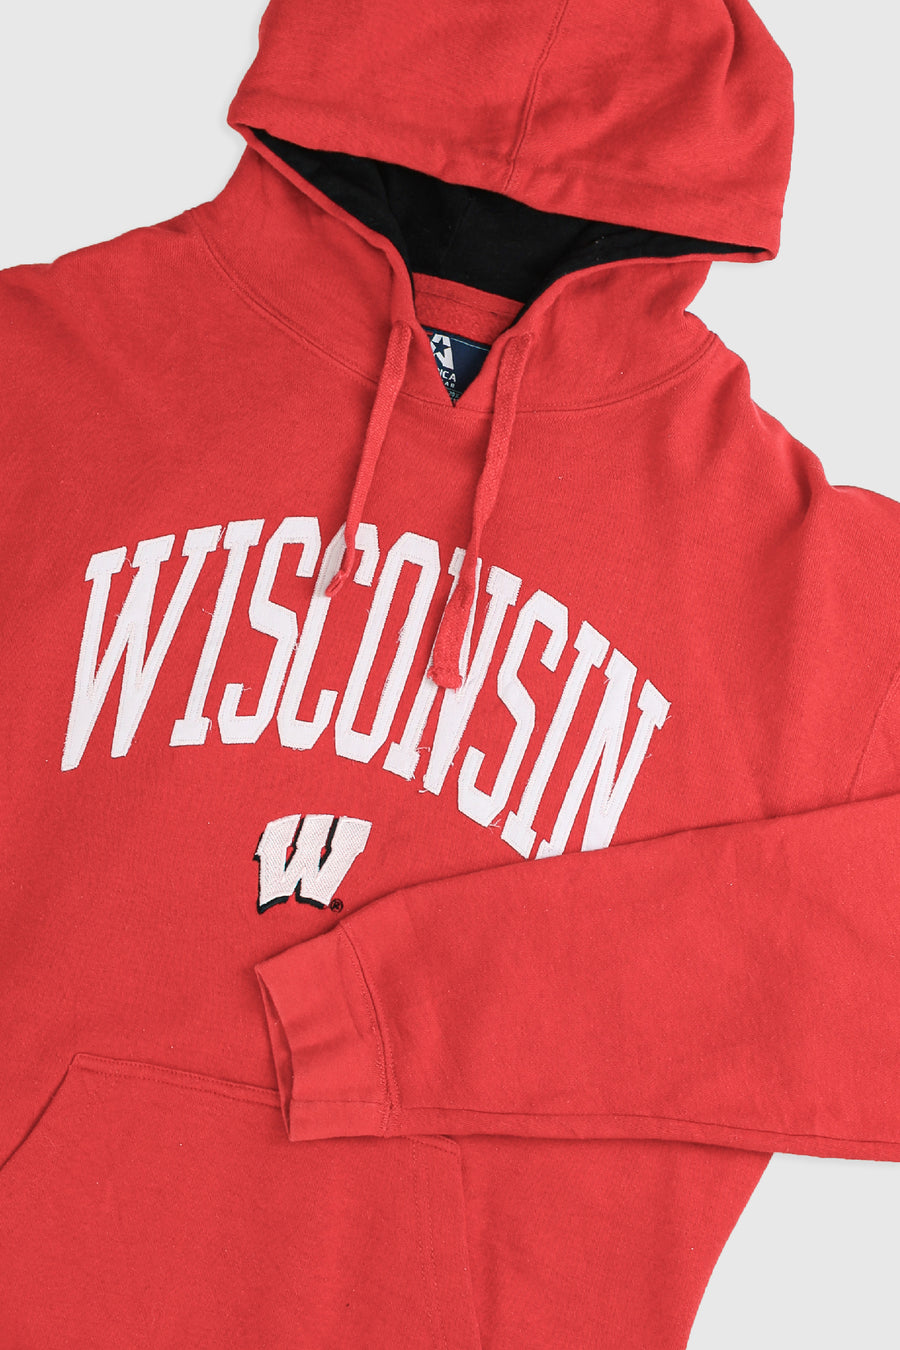 Vintage Wisconsin Sweatshirt - L